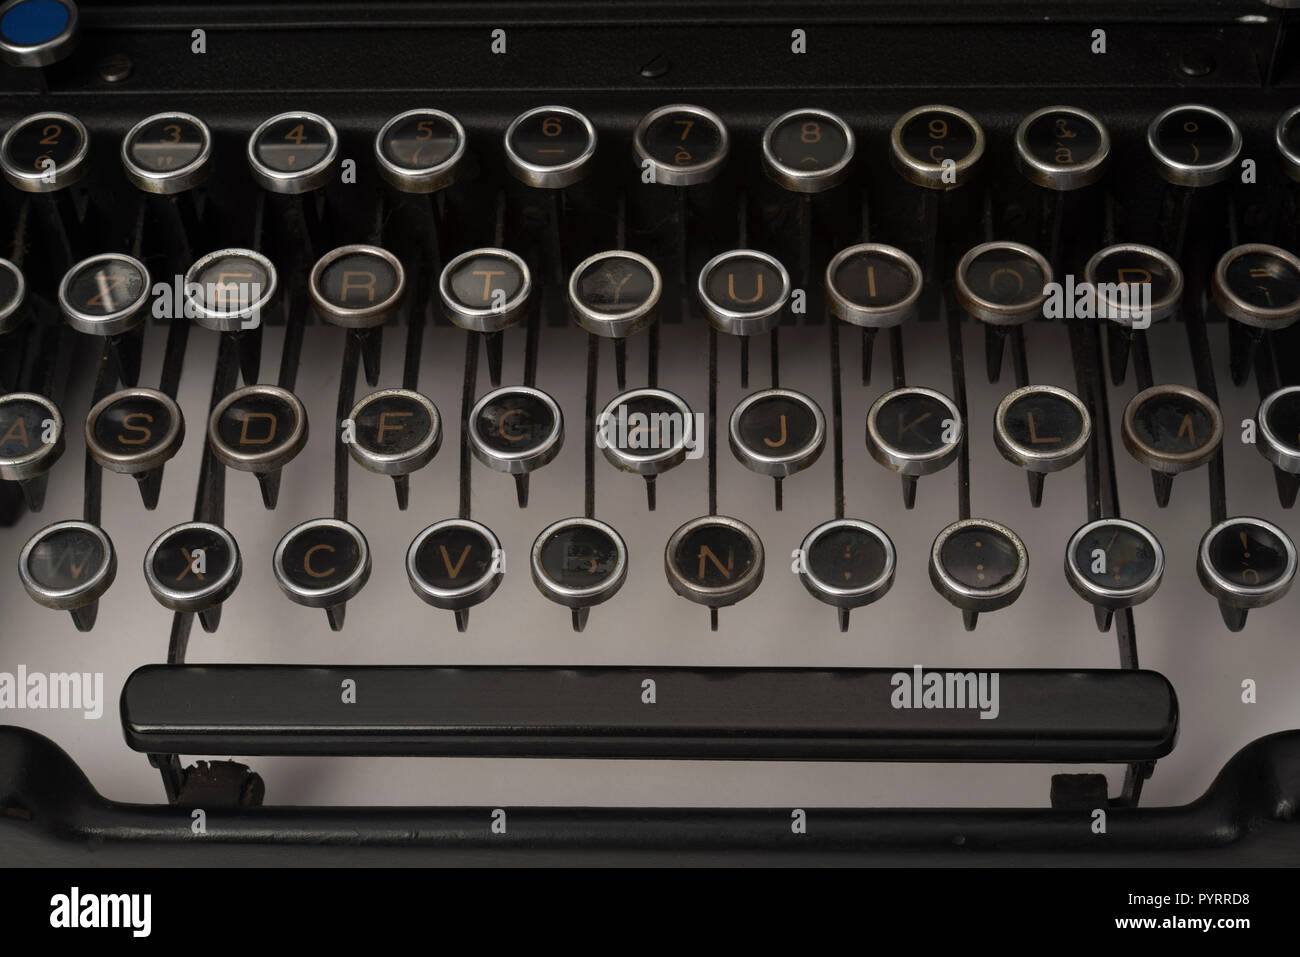 Ancienne machine à écrire olivetti m40/3 1930 détail,claviers,macchina da scrivere antica anni 30 dettaglio tastiera Banque D'Images